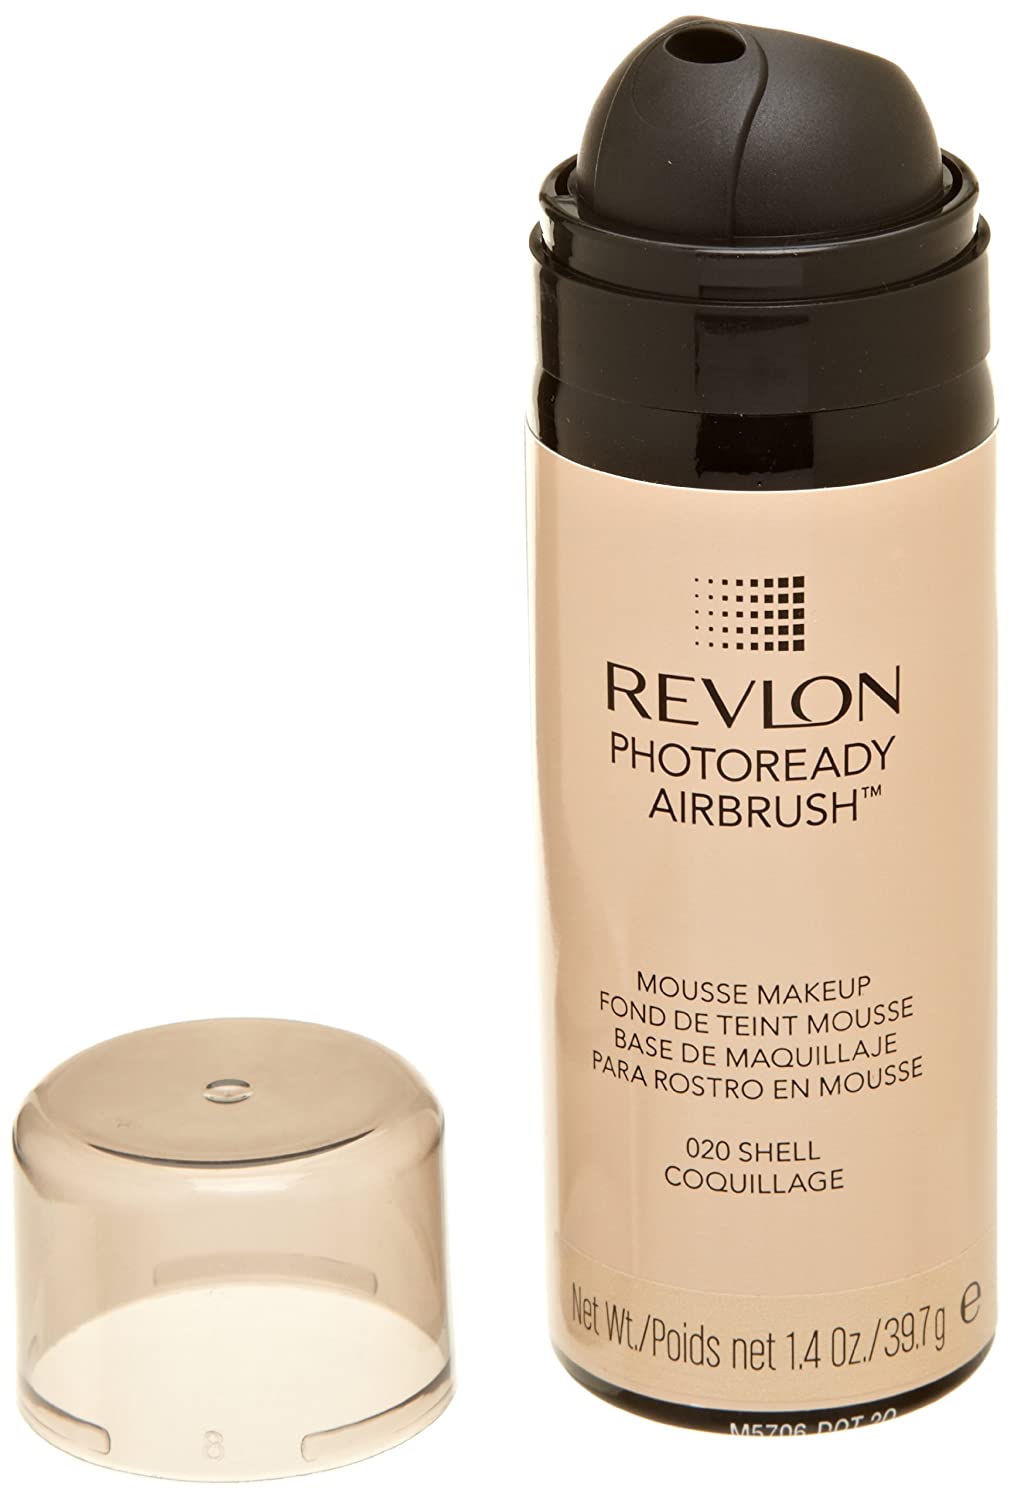 REVLON Photo-Ready Airbrush Mousse Makeup, Shell, 1.4 Oz (39.7g)